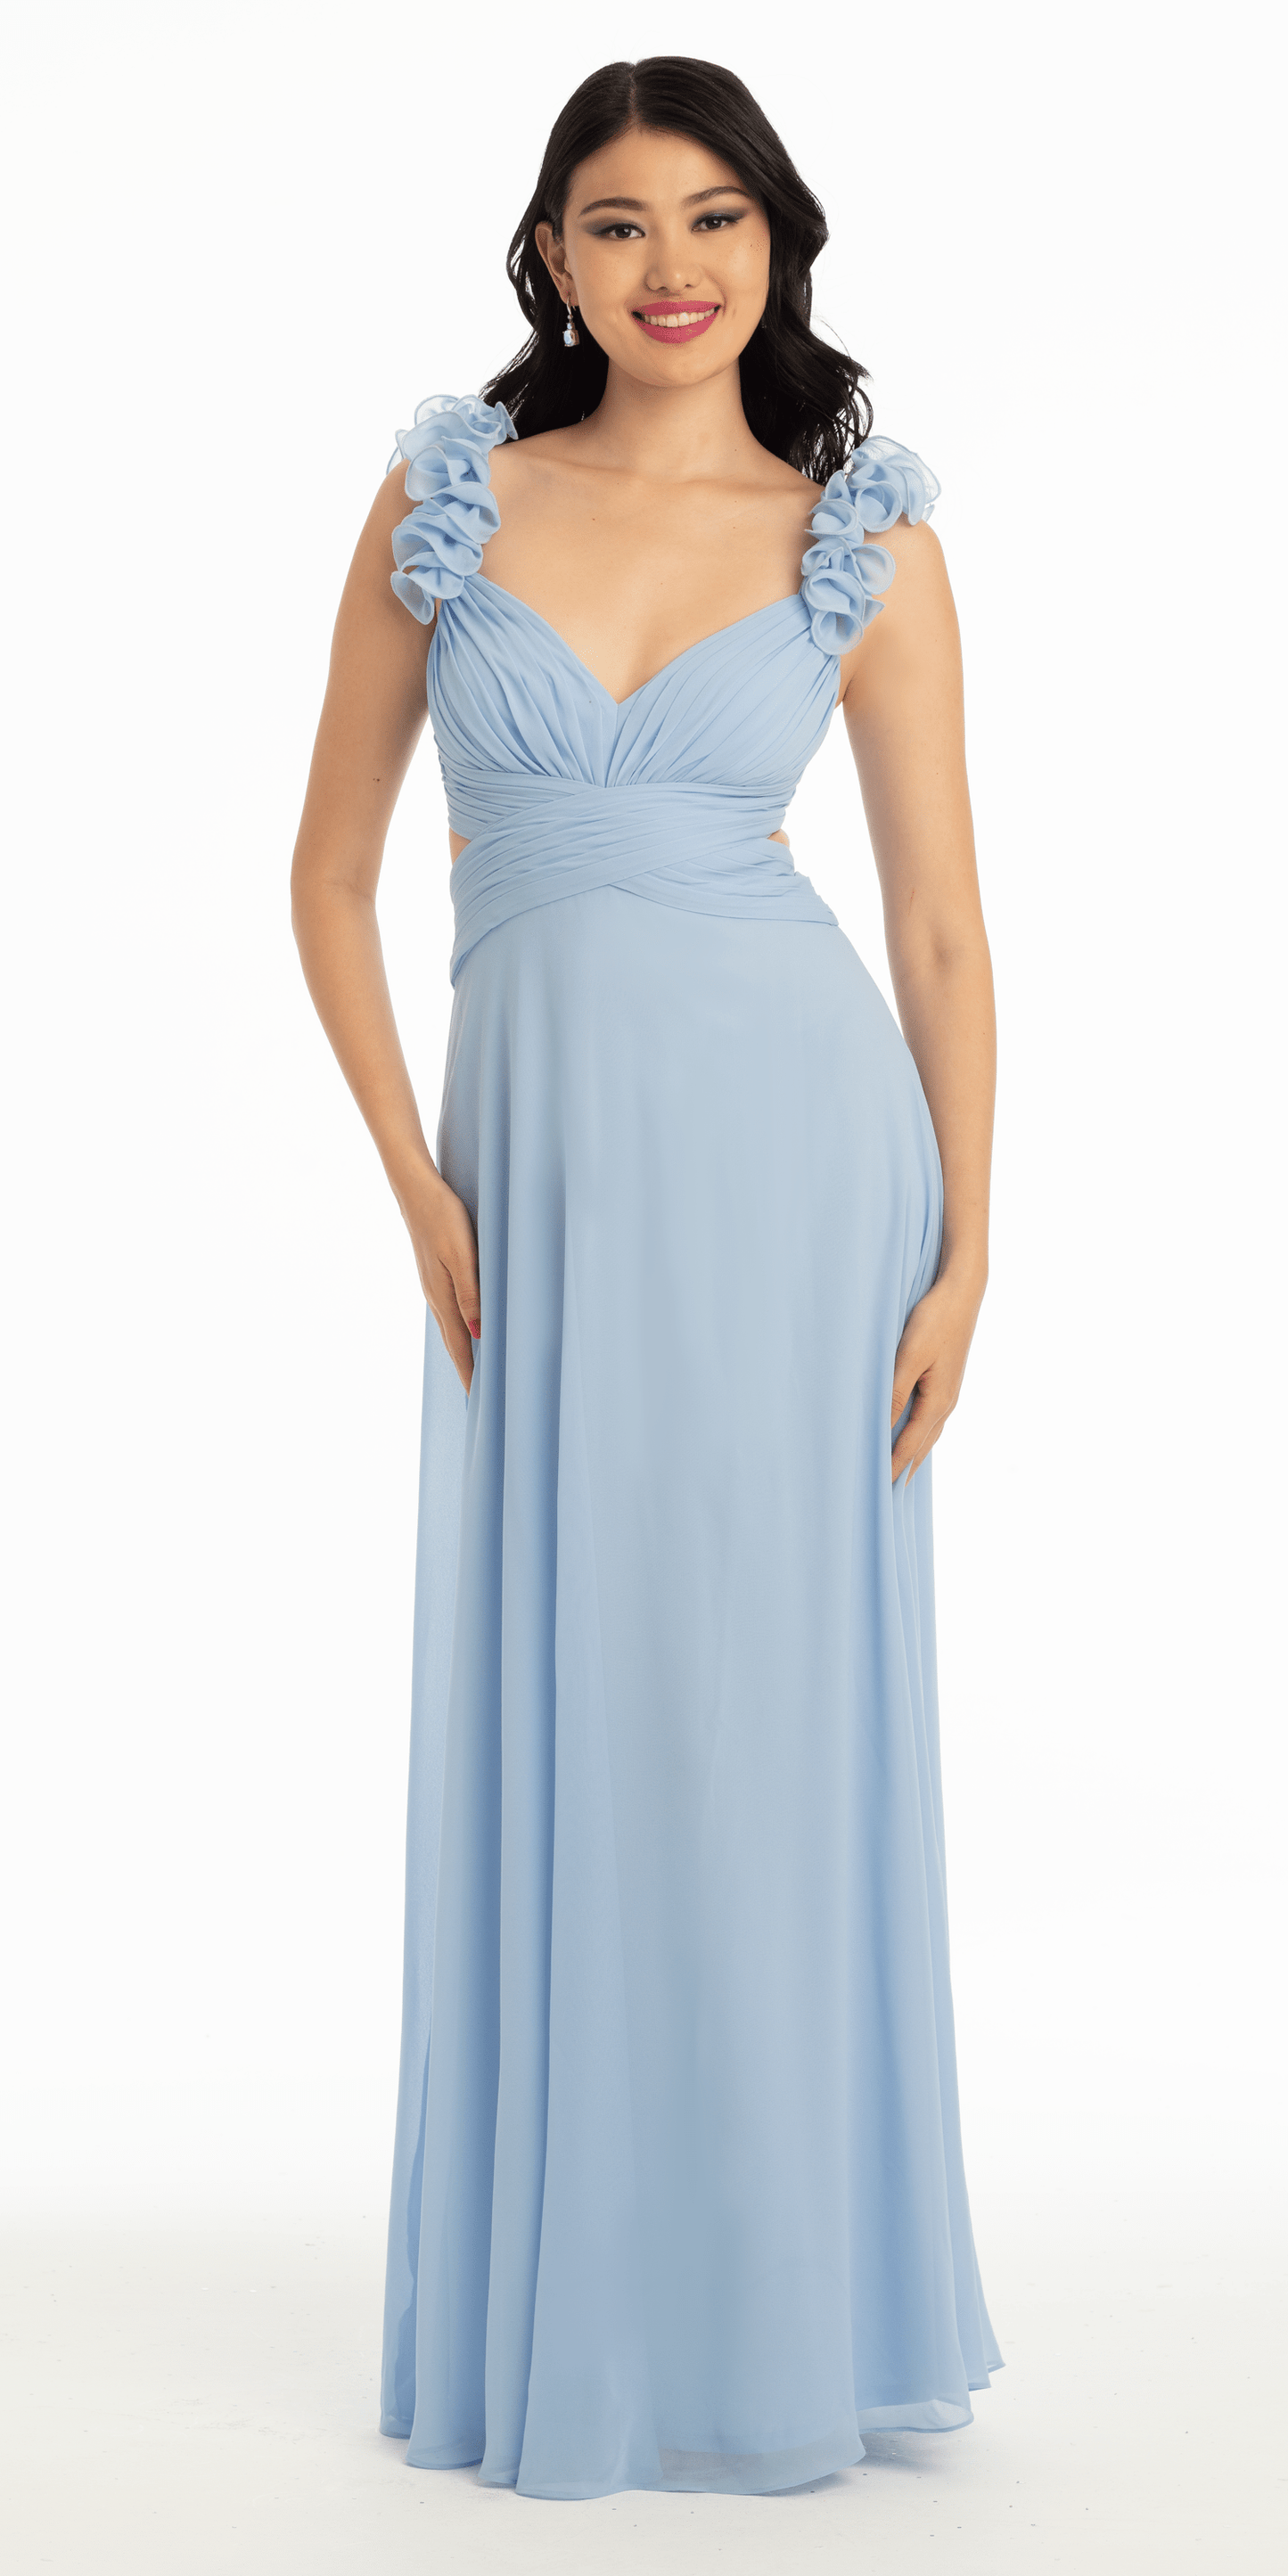 Camille La Vie Chiffon Ruffle Shoulder Lace Up Back Column Dress missy / 0 / light-blue